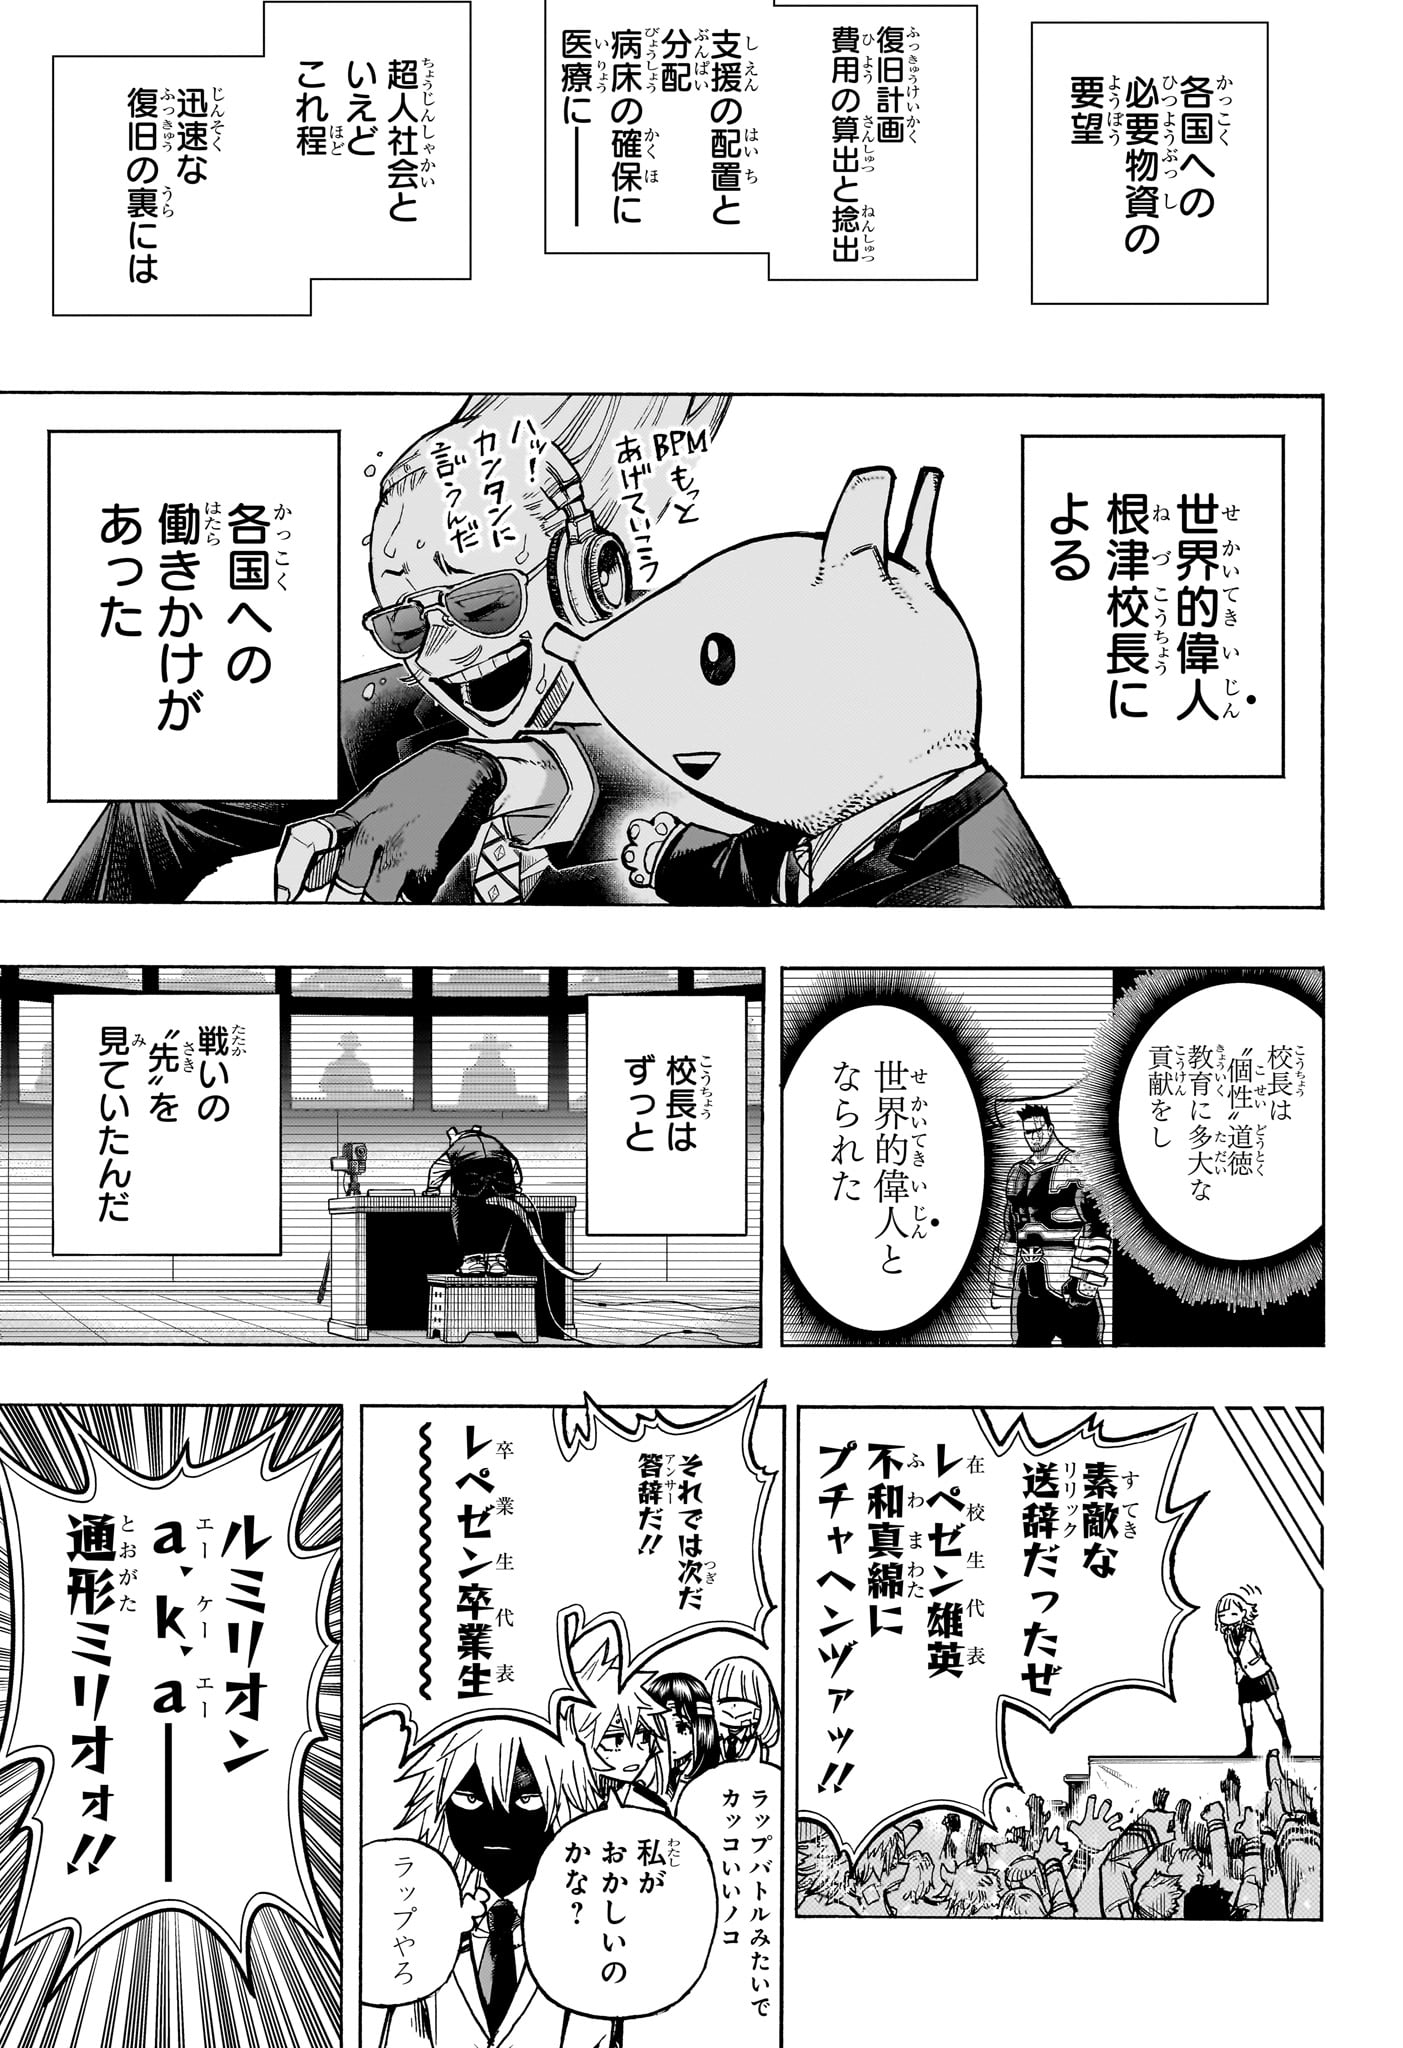 Boku no Hero Academia - Chapter 425 - Page 3